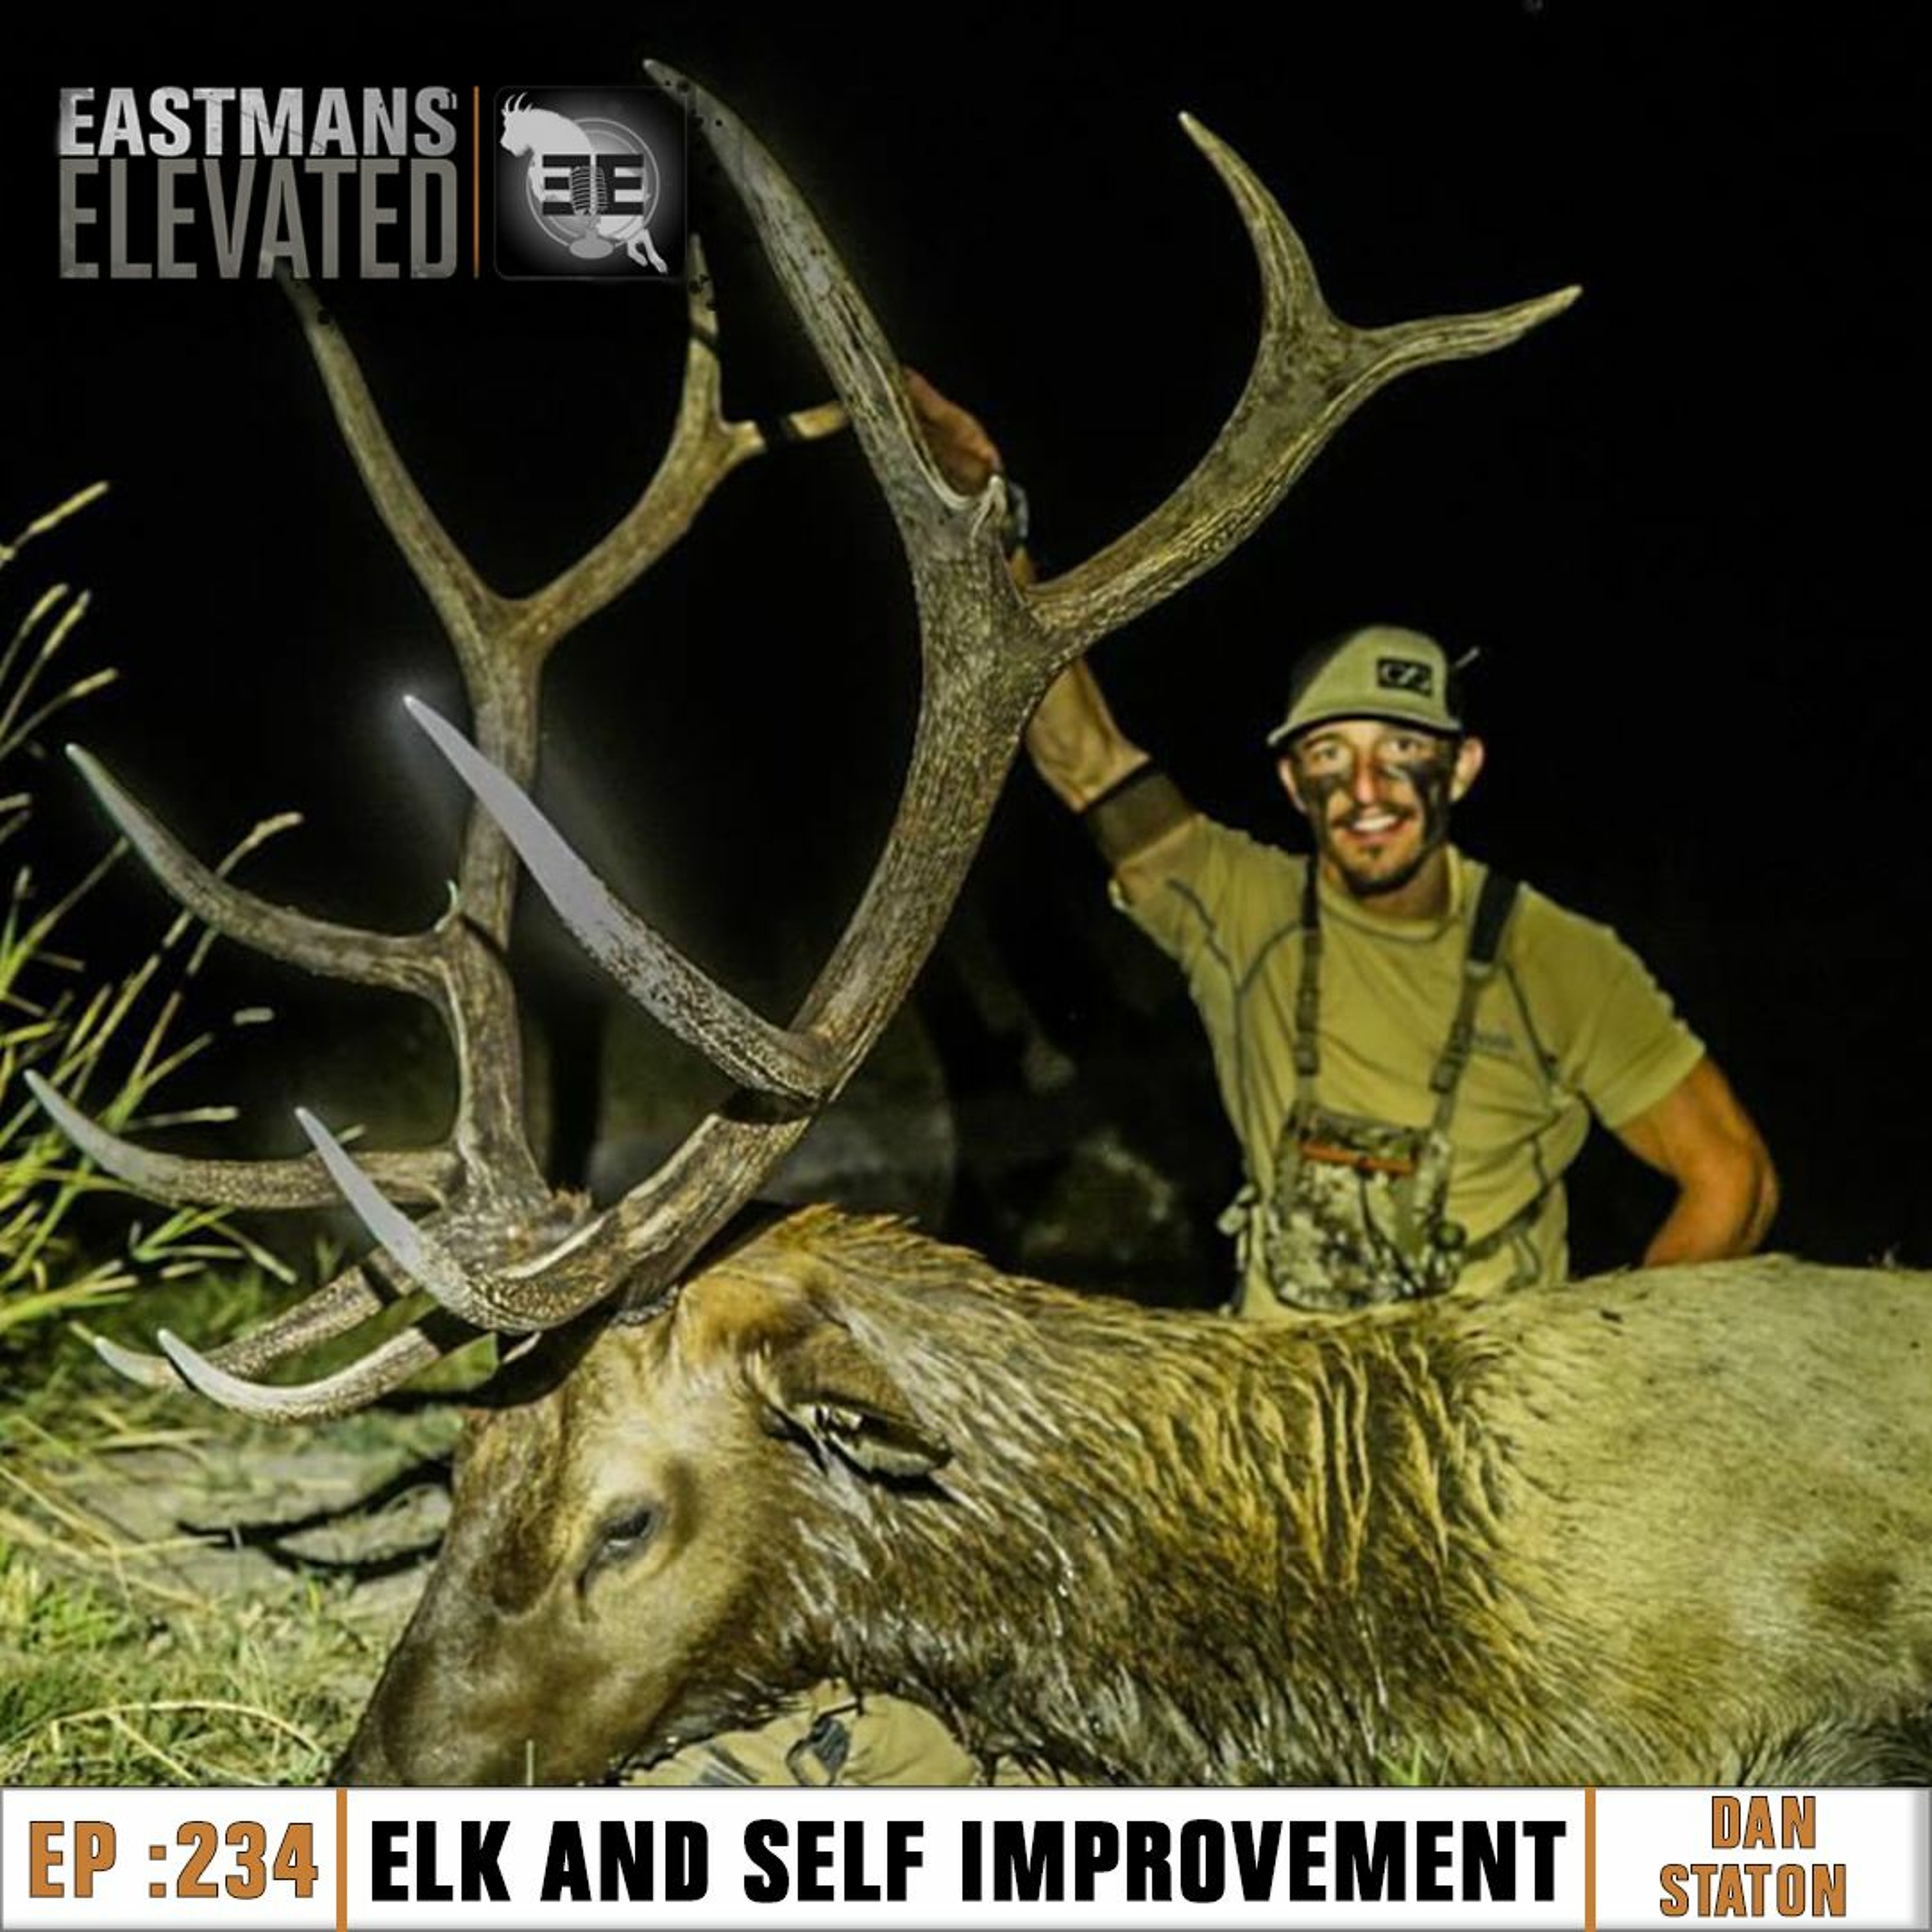 Episode 235: Elk and Self Improvement with Dan Staton